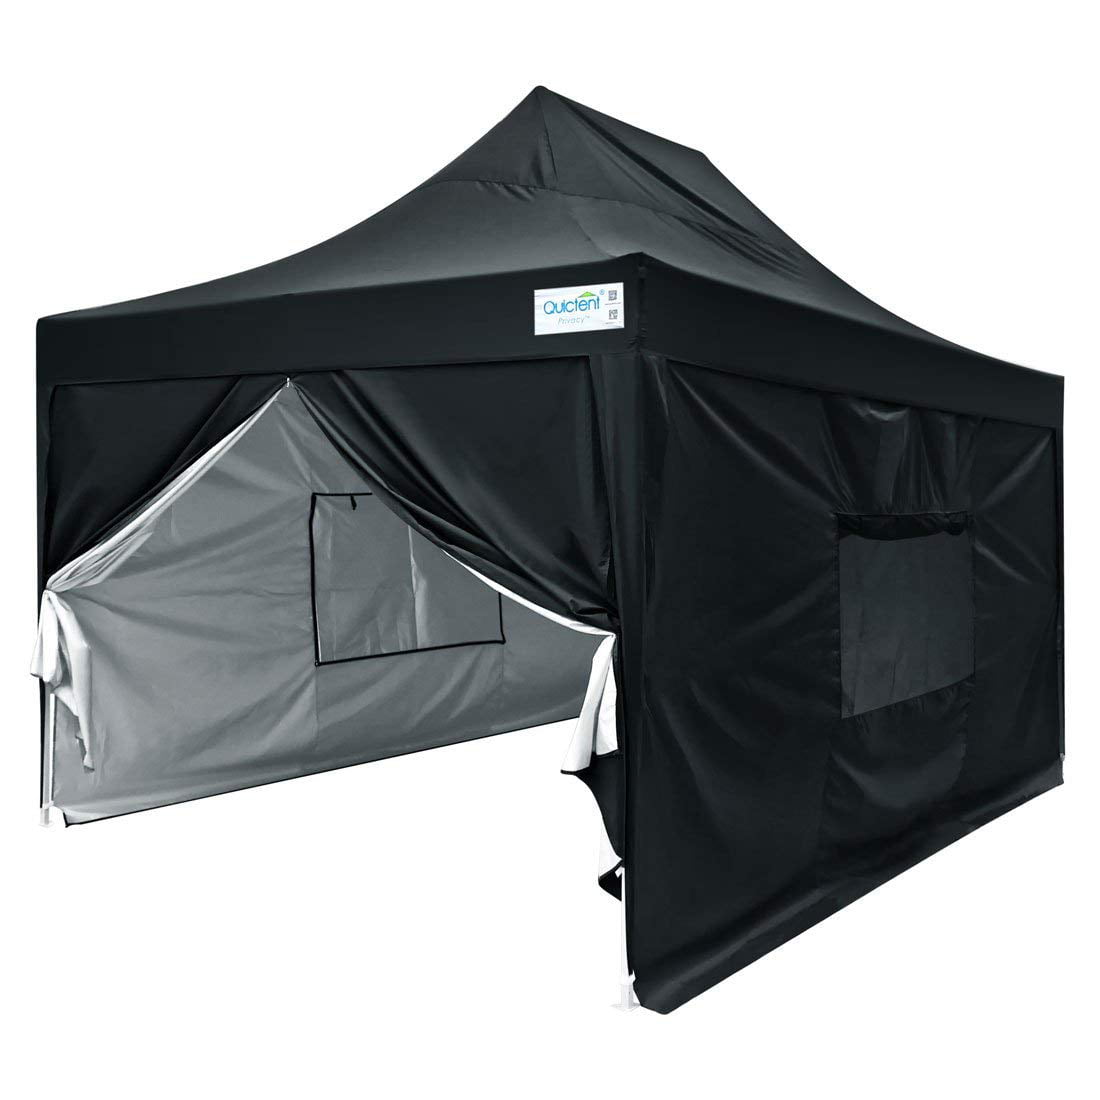 10' X 15' Outdoor Pop up Canopy Gazebo Pavilion Tent Shelter White Frame Black 